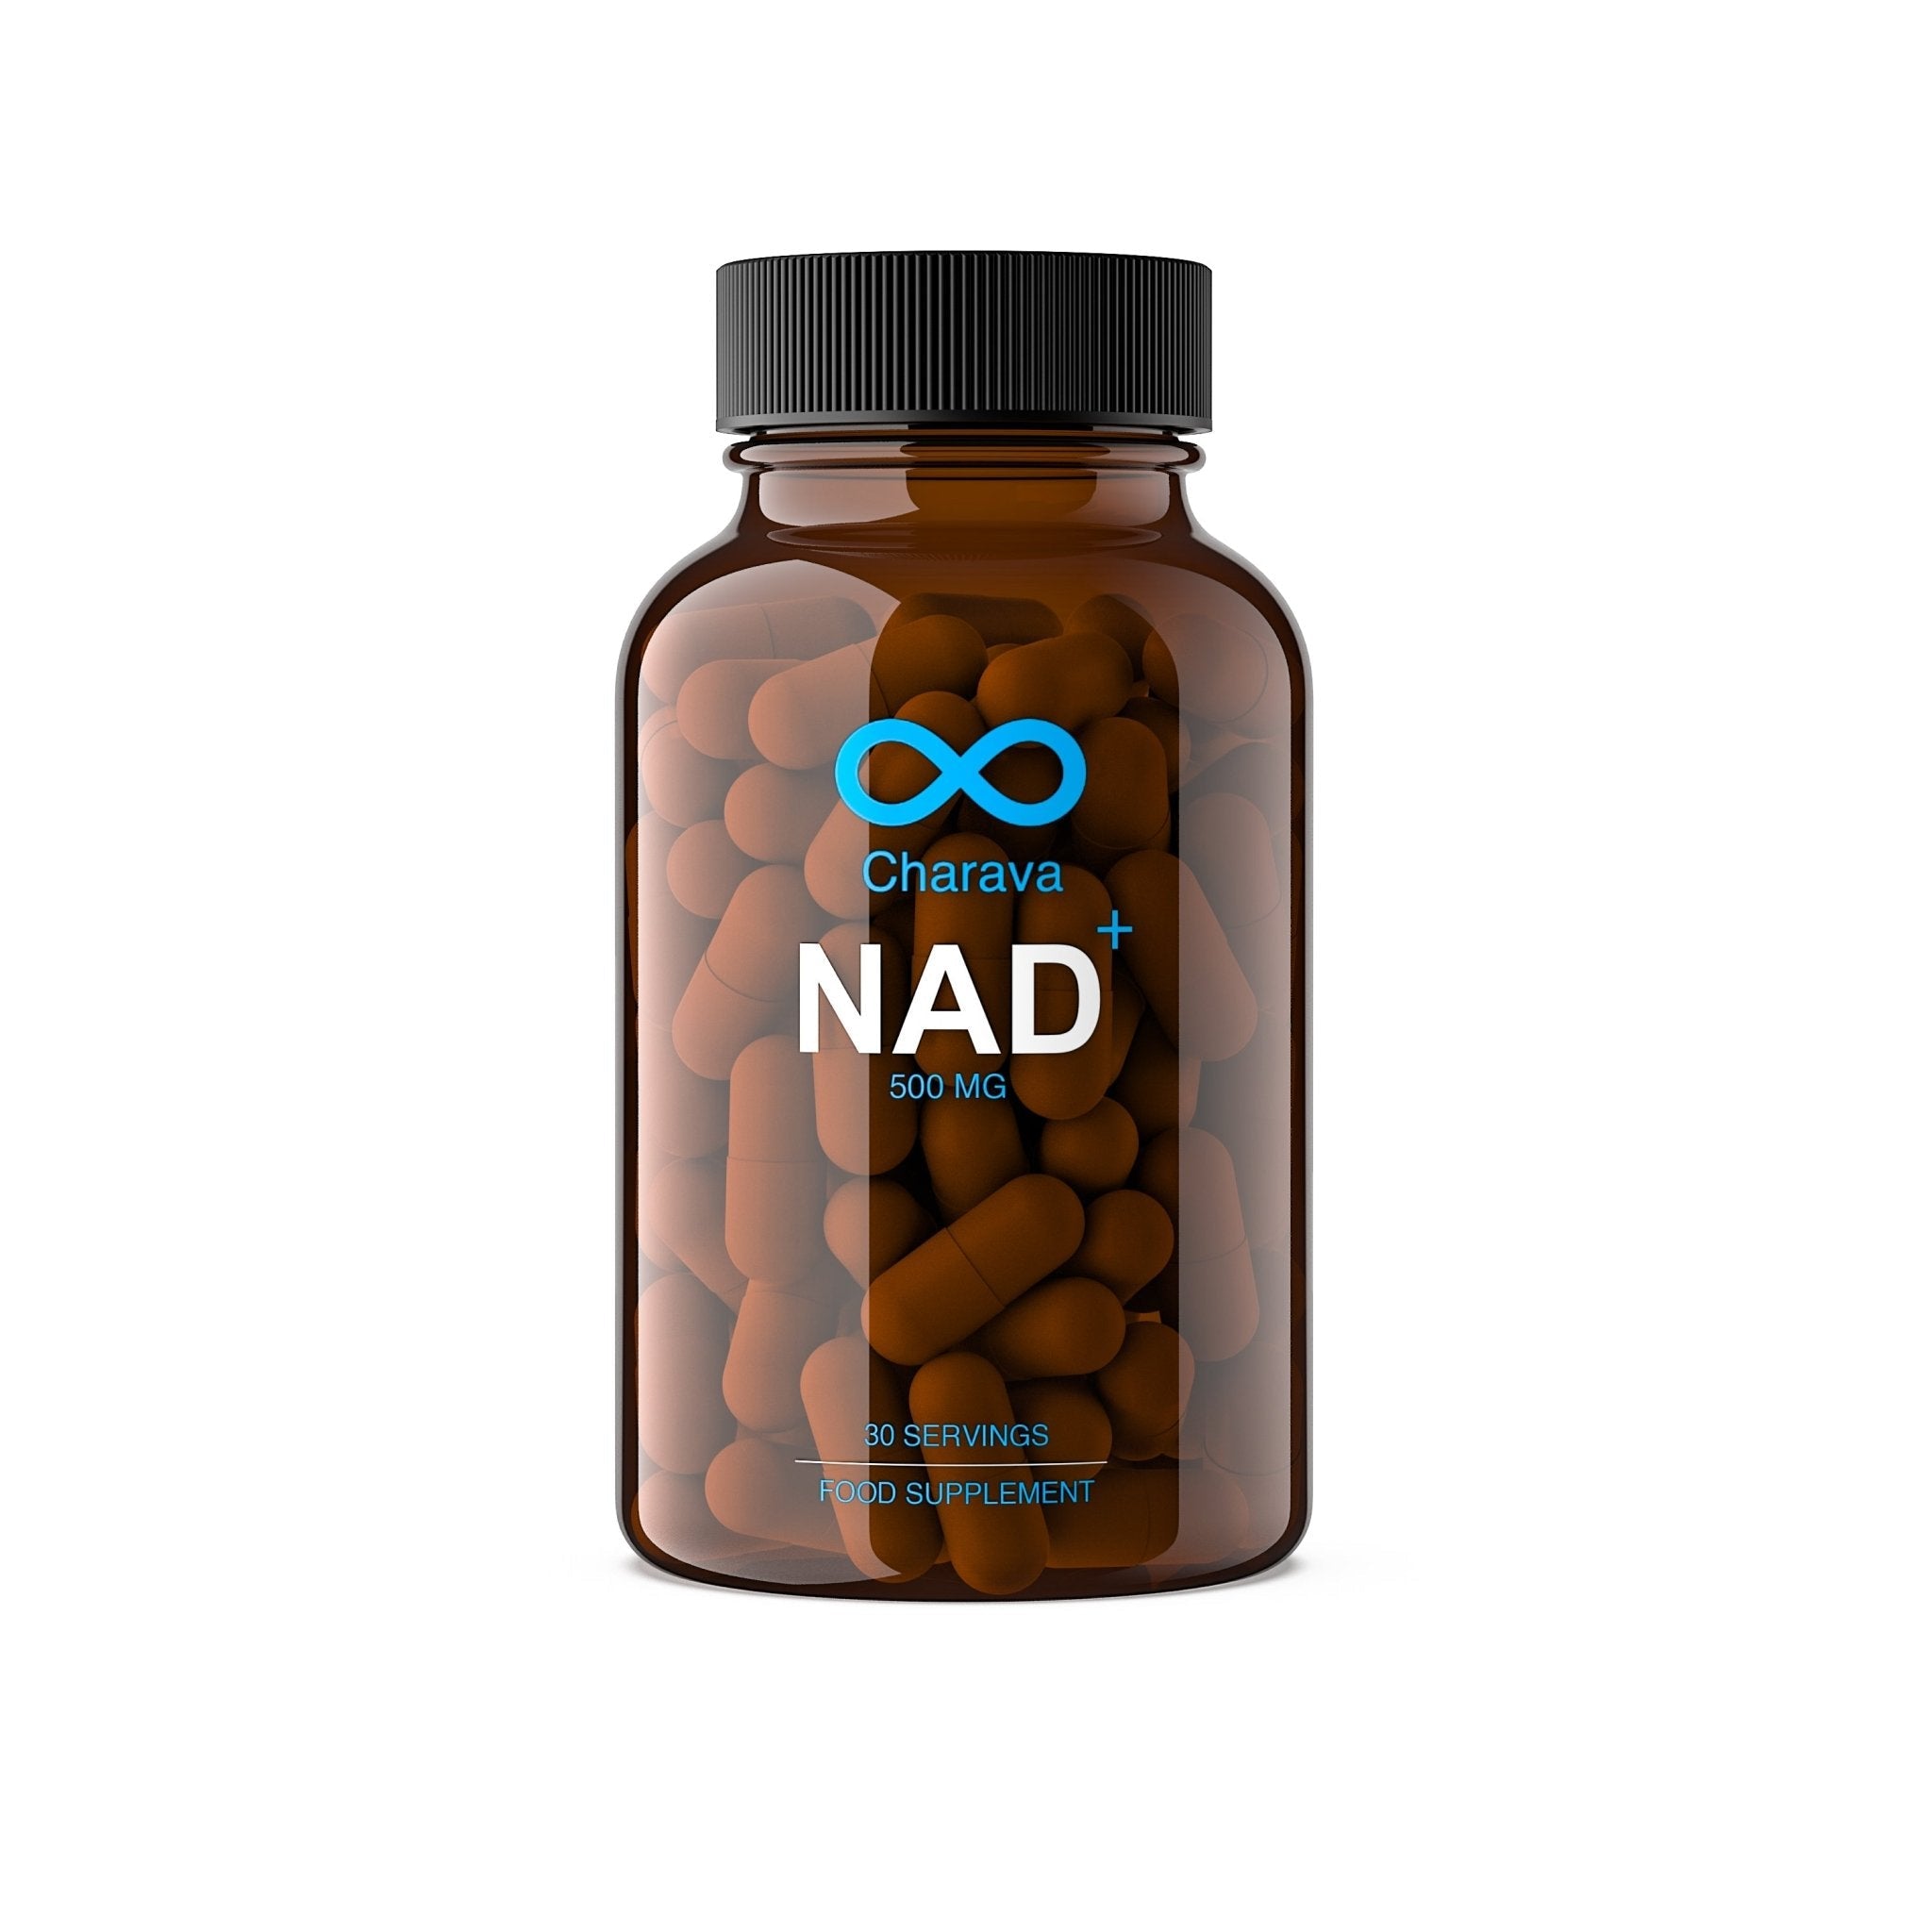 NAD+ 500mg - Charava UK